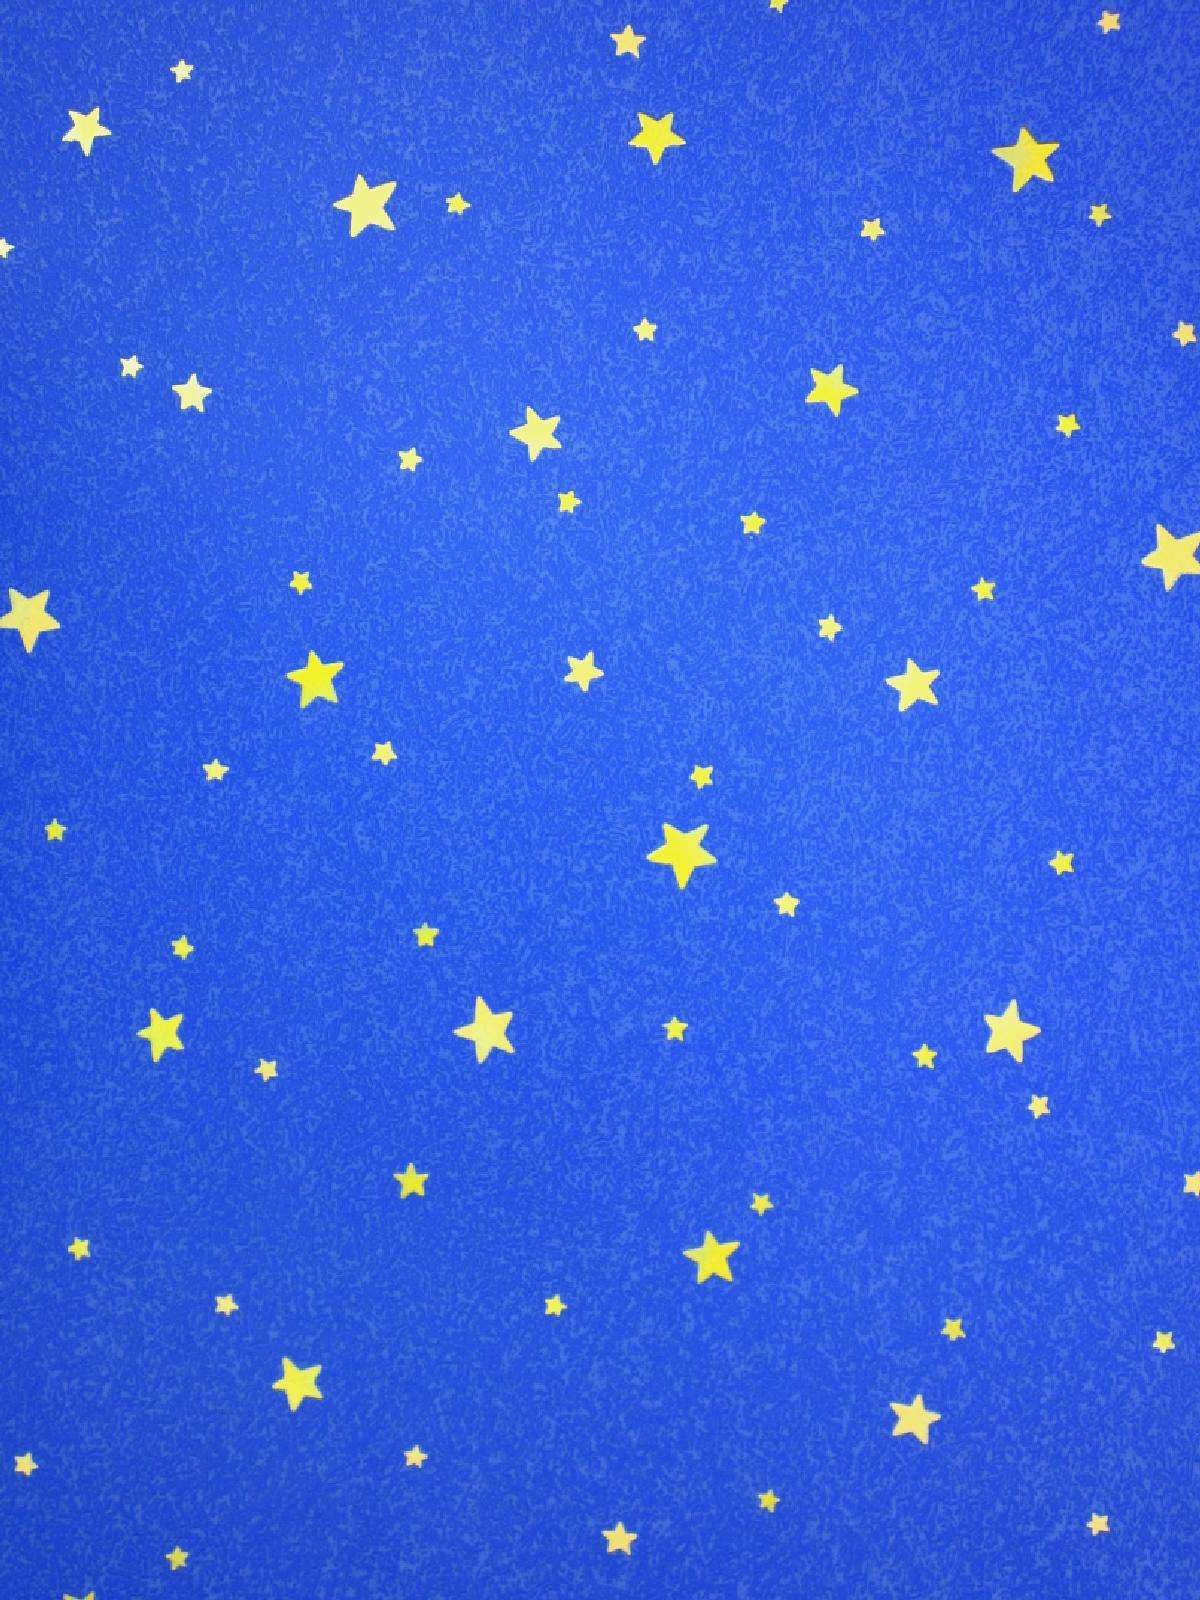 star wallpaper blue